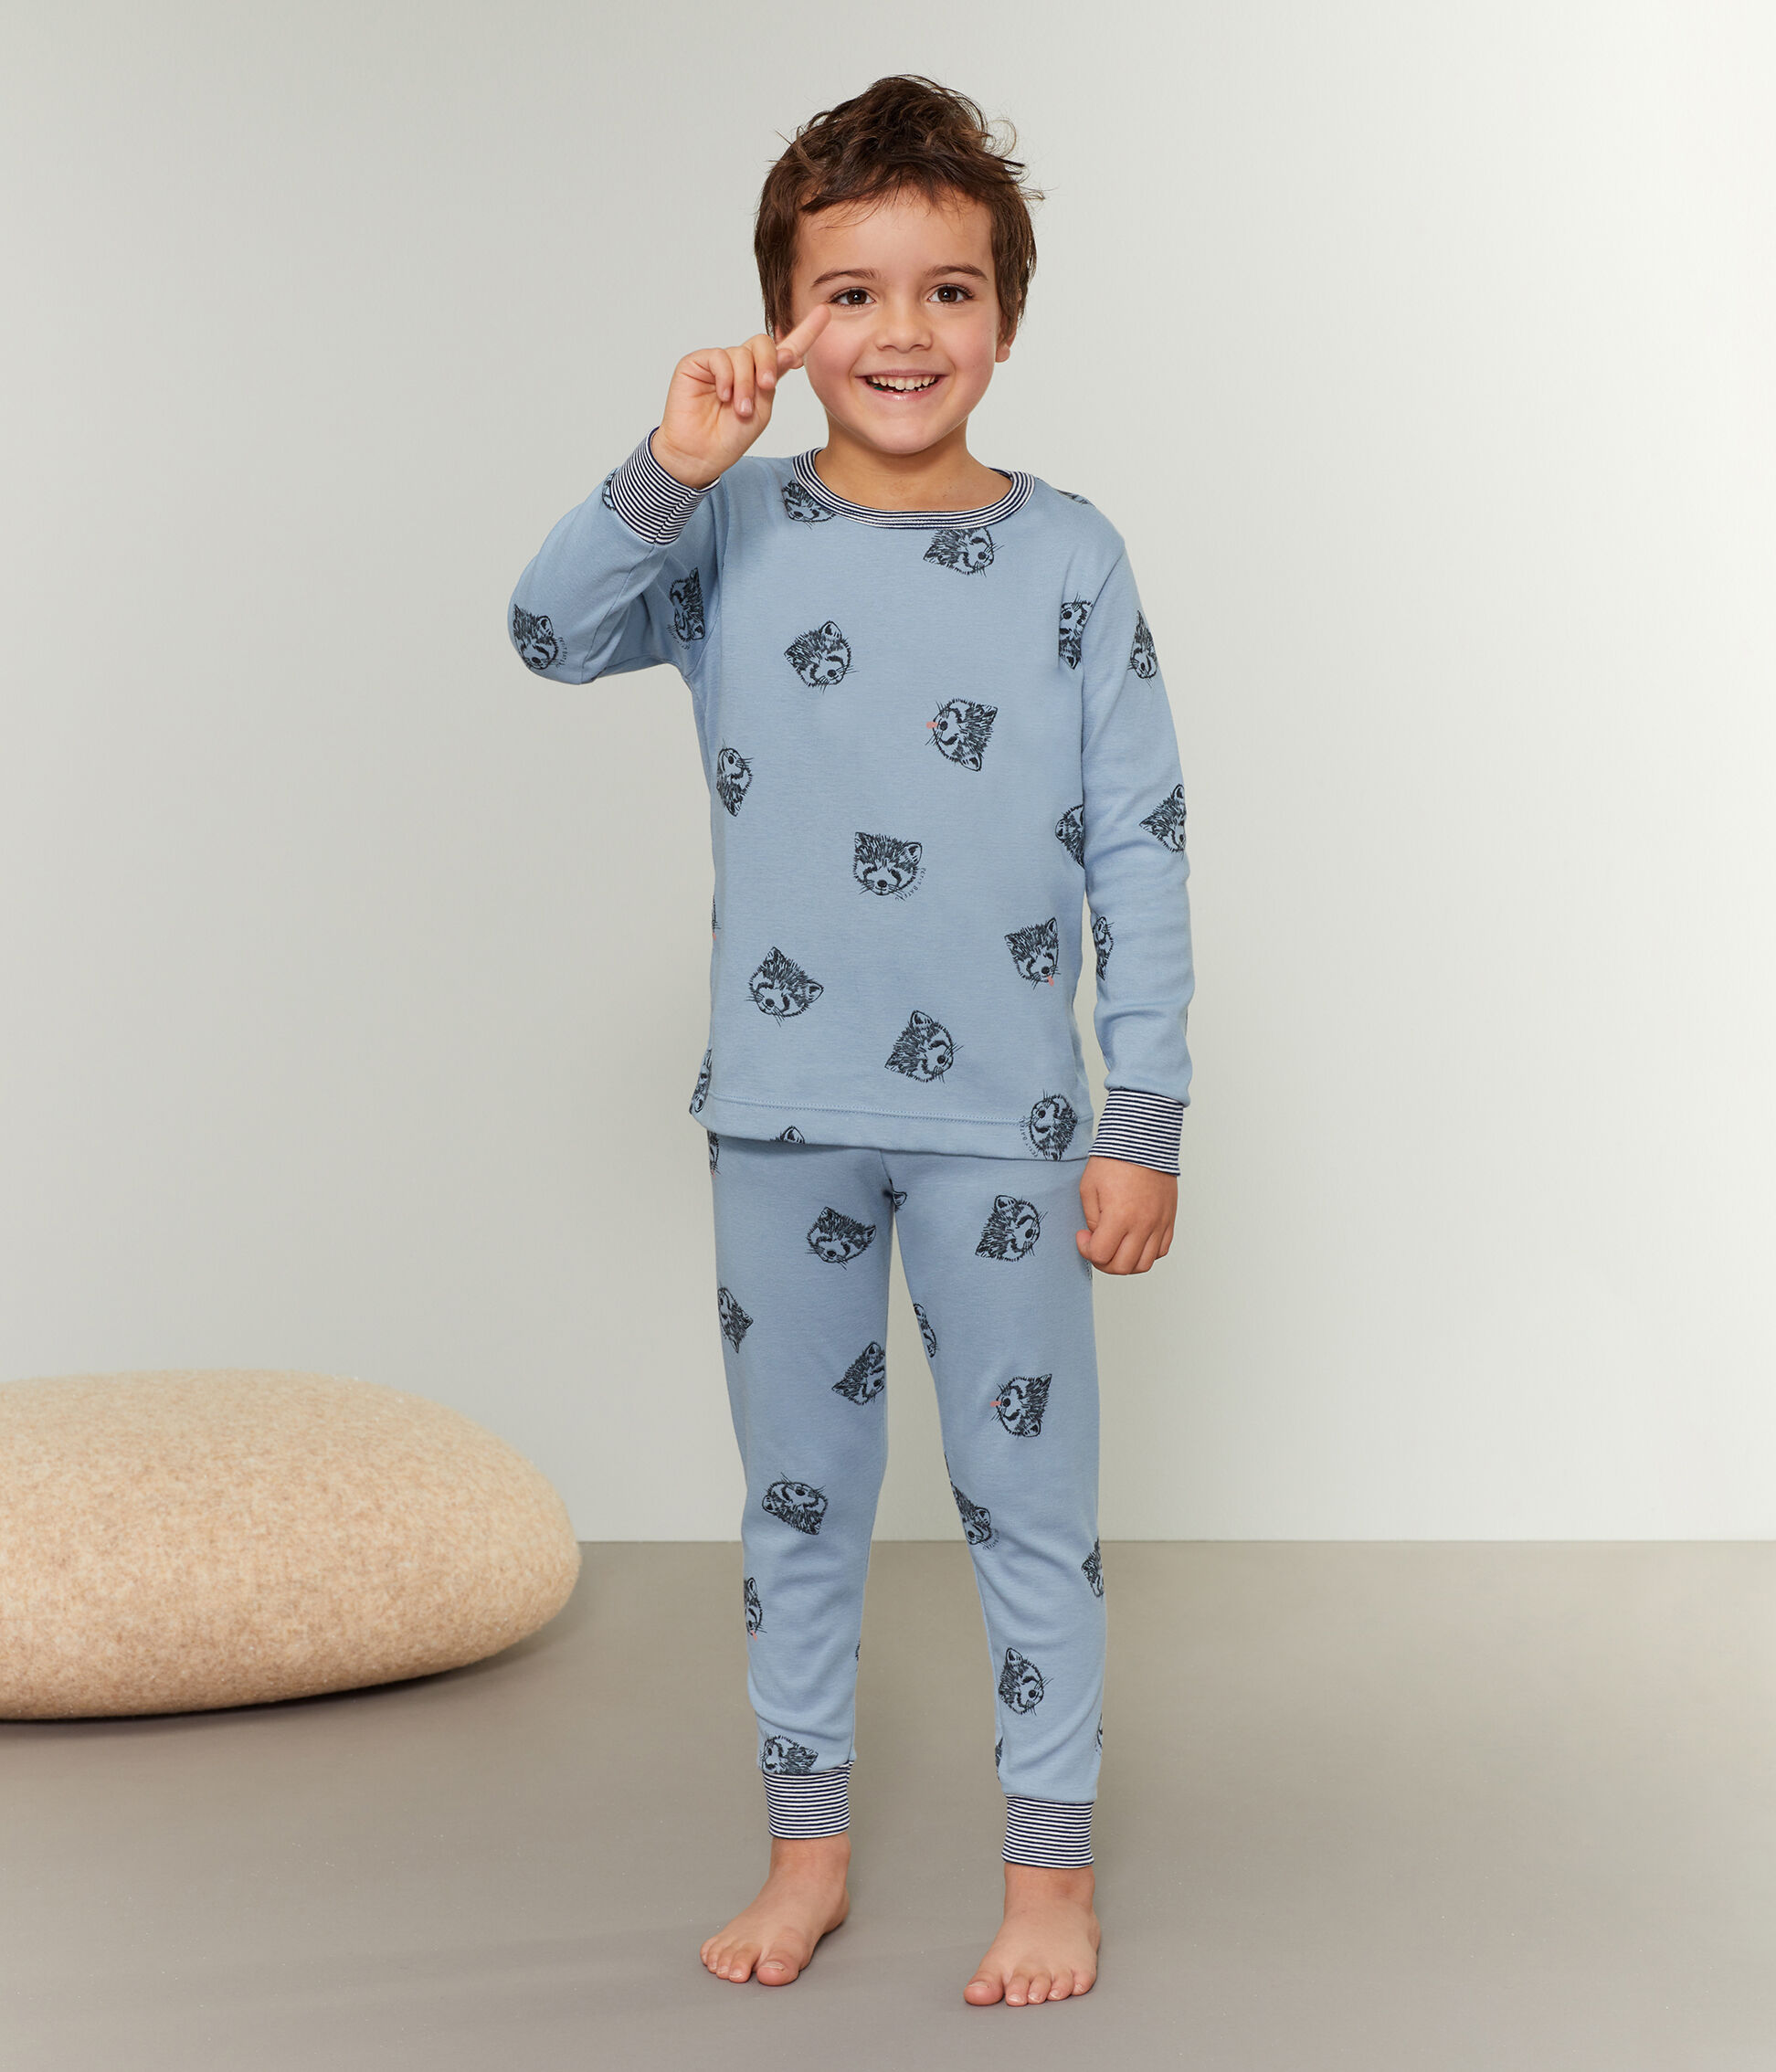 Petit Bateau Pijama para Niños 